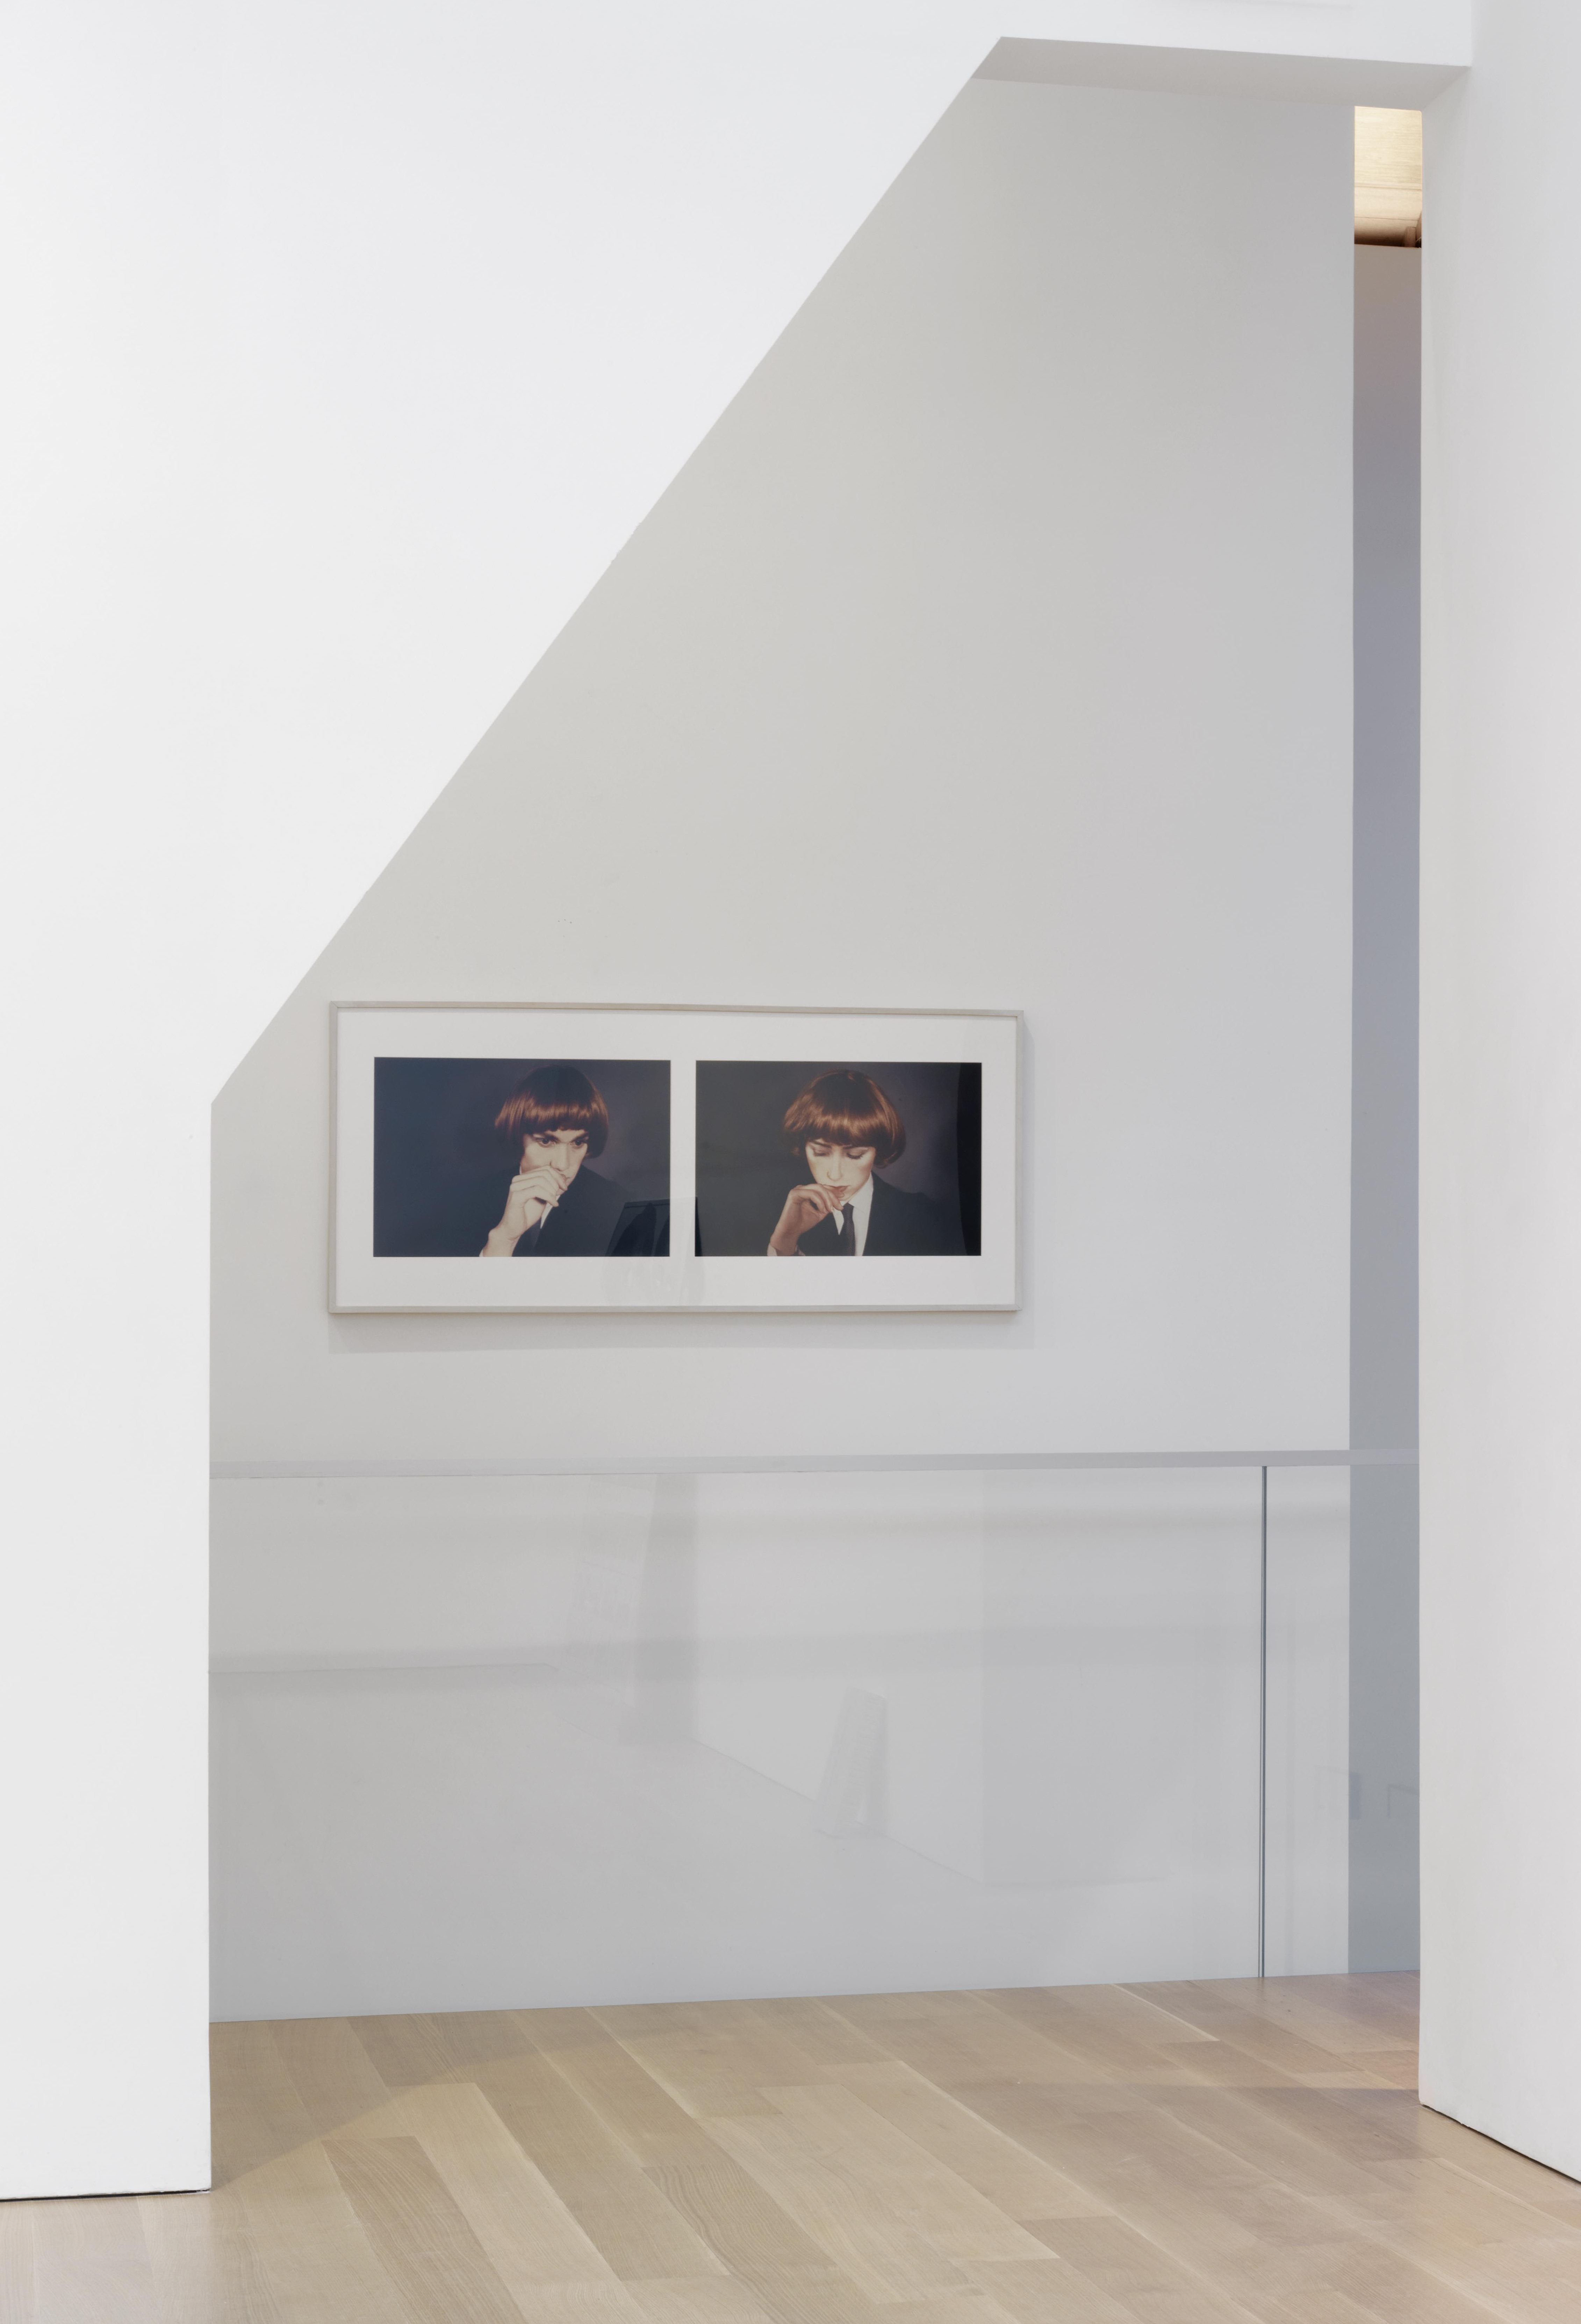 Installation view, Richard Prince, Untitled (Richard Prince and Cindy Sherman), 1980